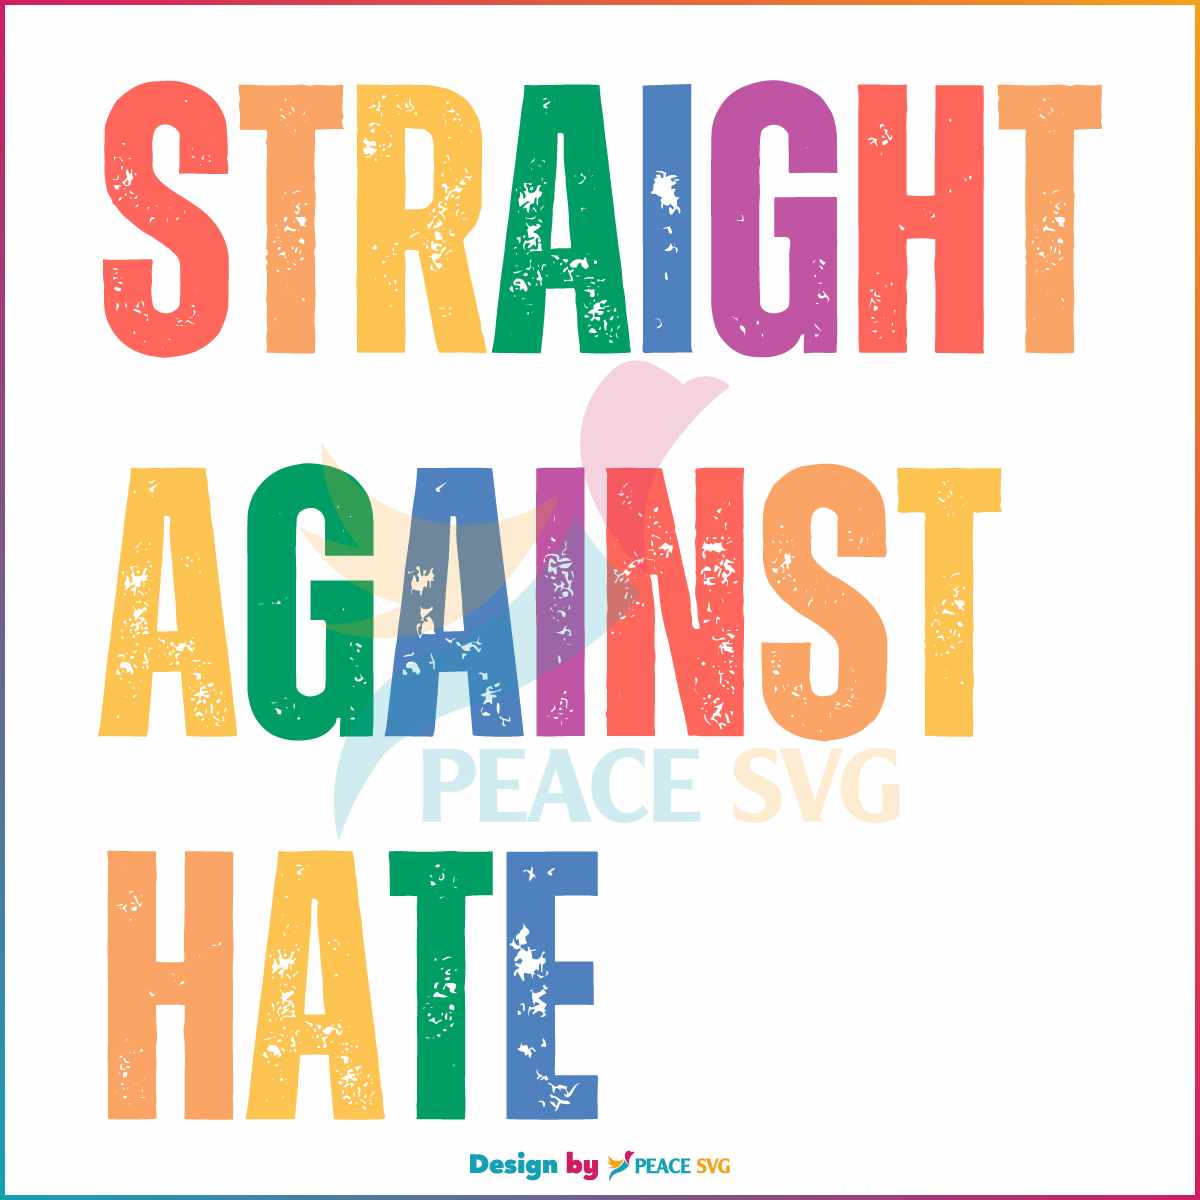 pride-lgbtq-straight-against-hate-svg-graphic-design-files